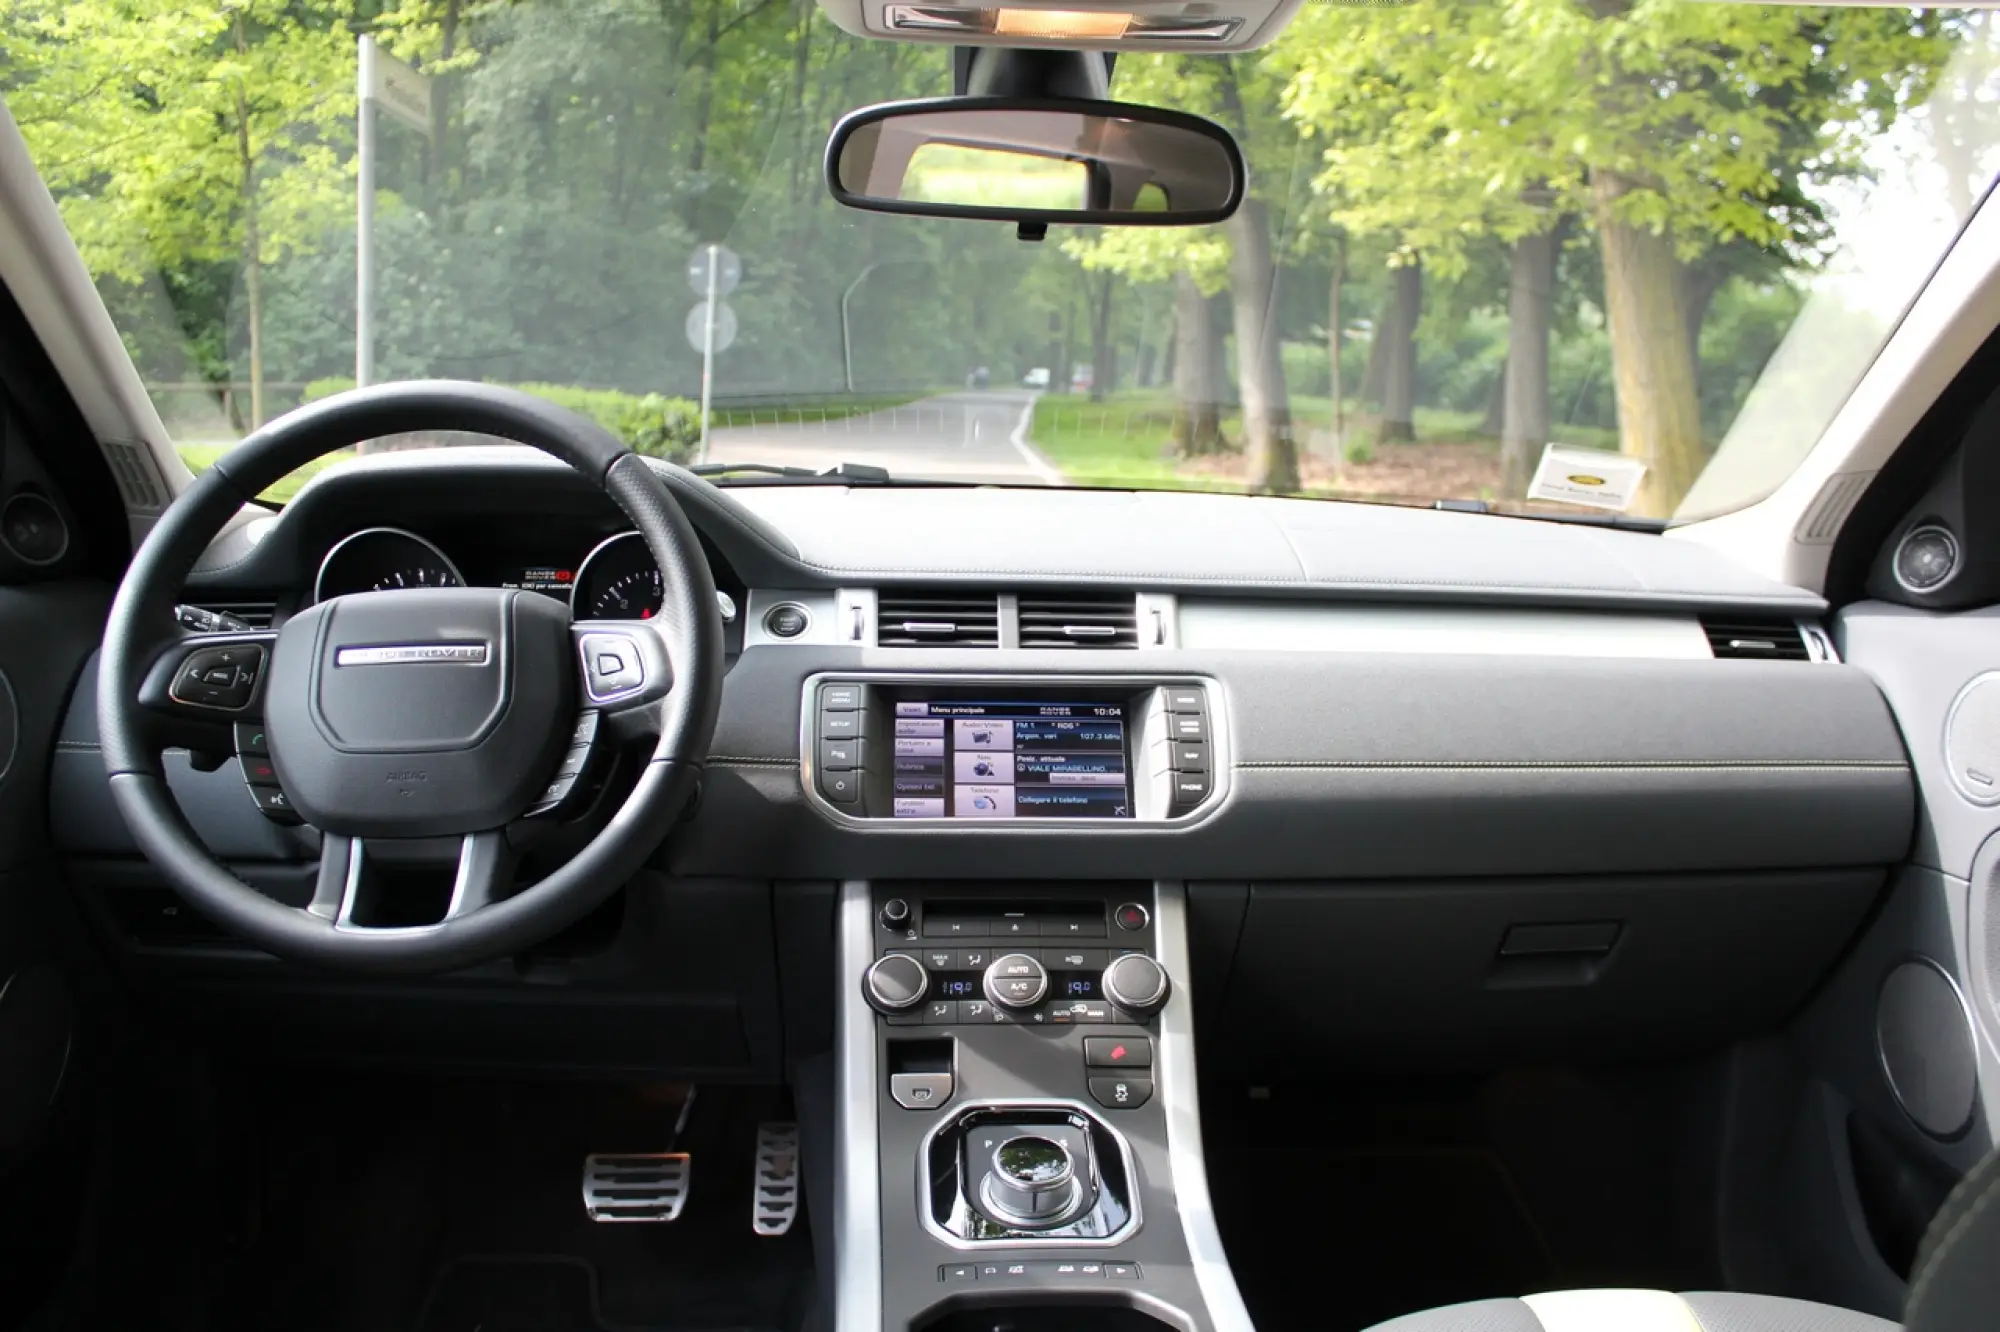 Range Rover Evoque - Test Drive 2012 - 108